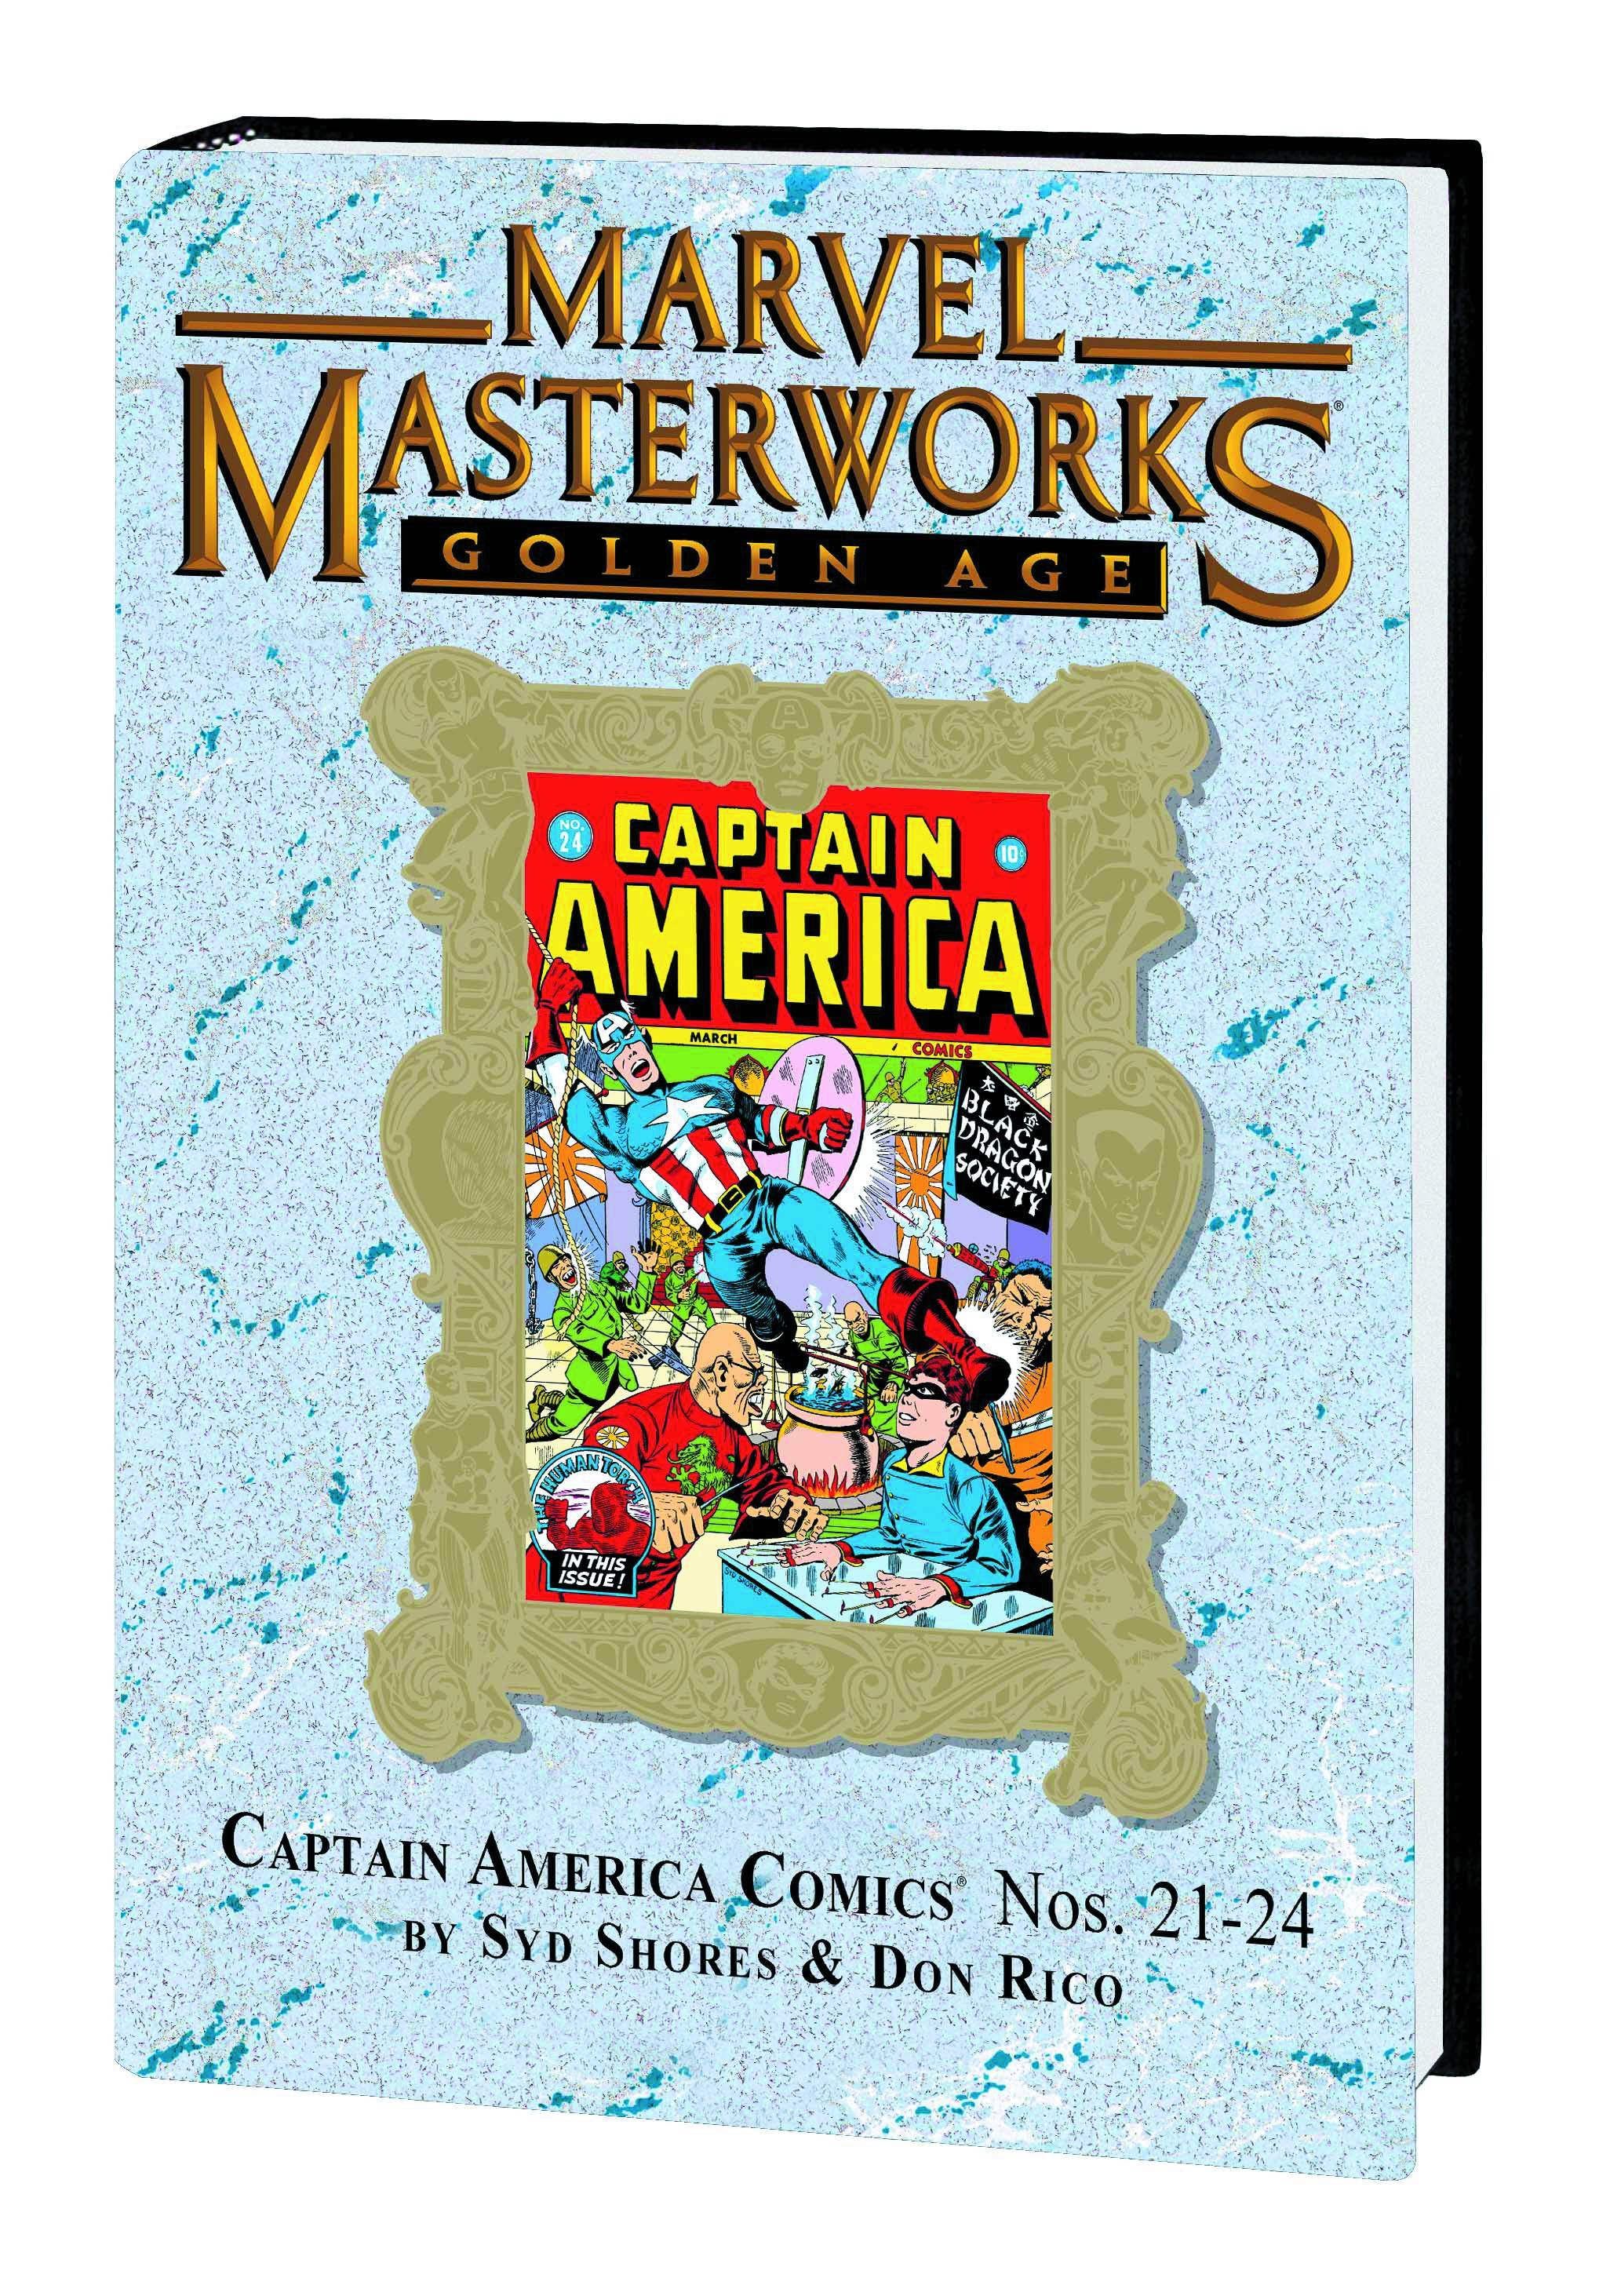 Marvel Masterworks Golden Age Captain America Hardcover Volume 6 Direct Market Variant Edition 189